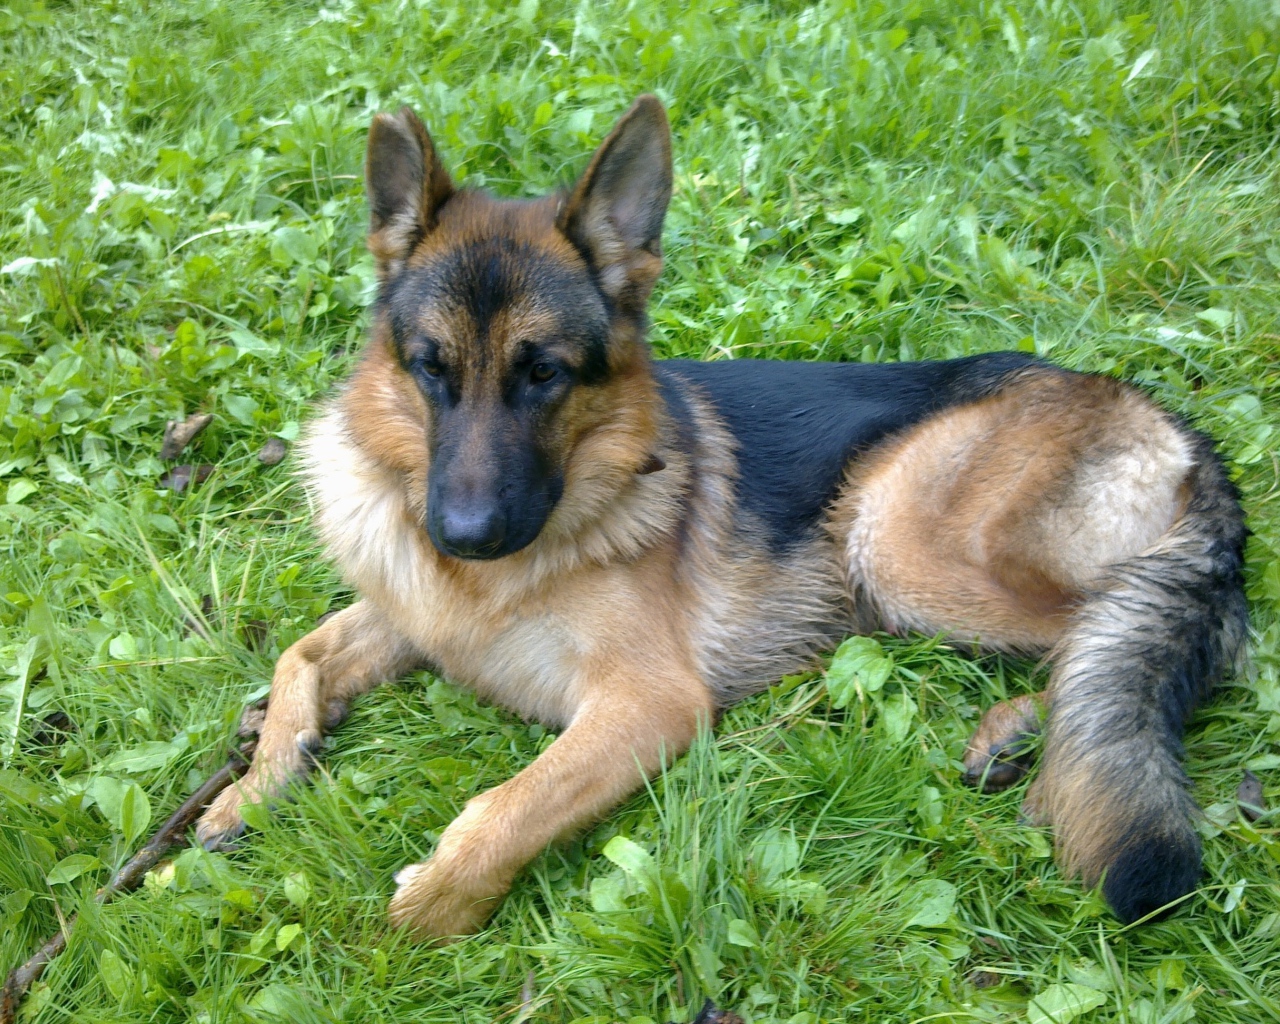 German Shepherd resting on the grass